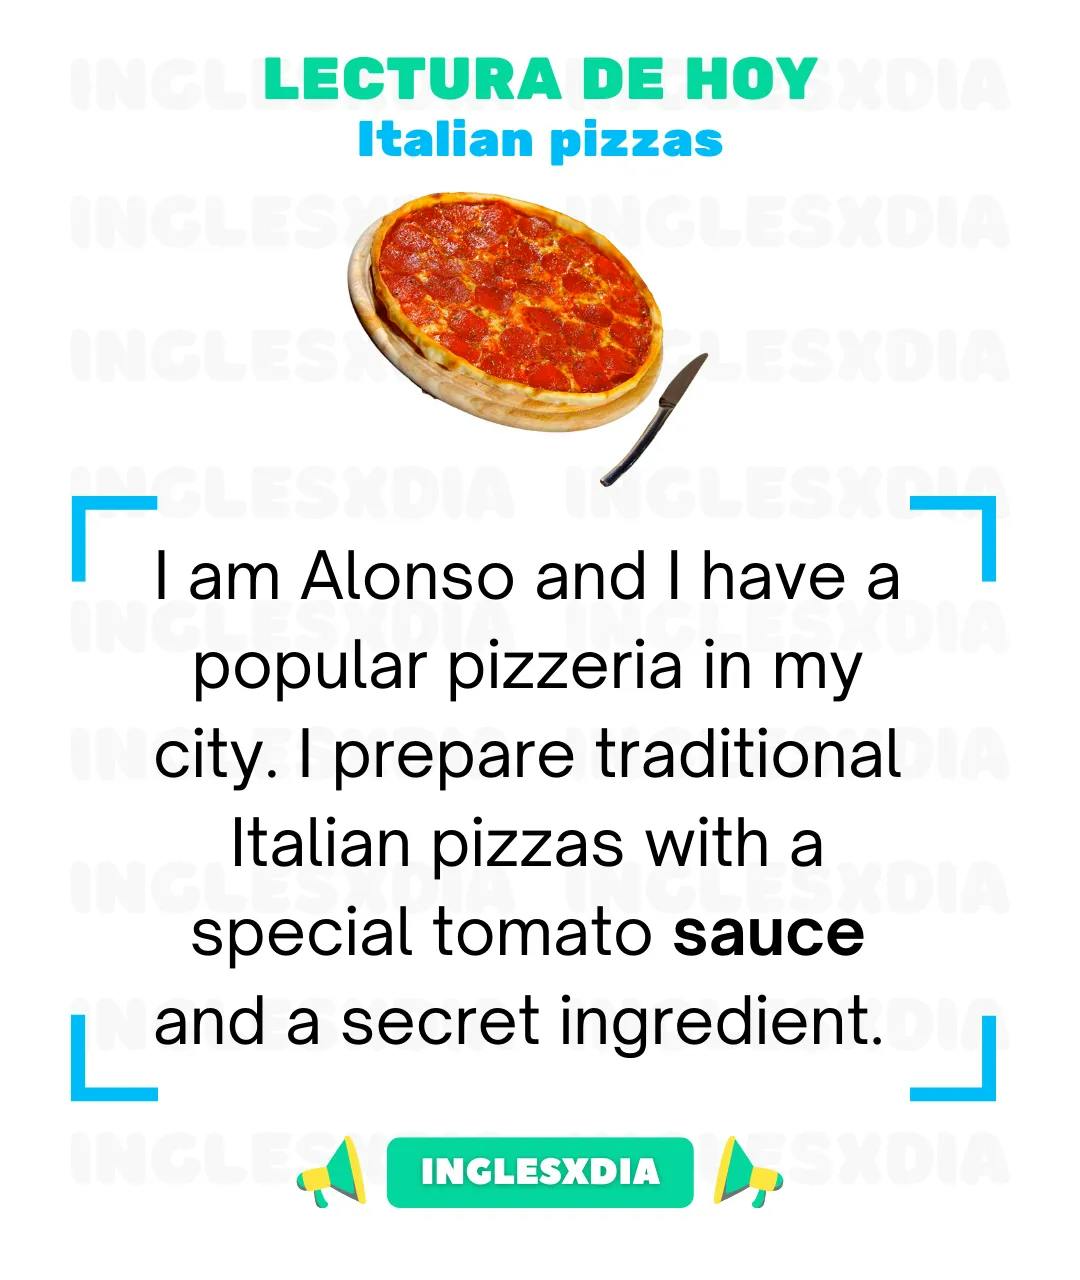 Italian pizzas